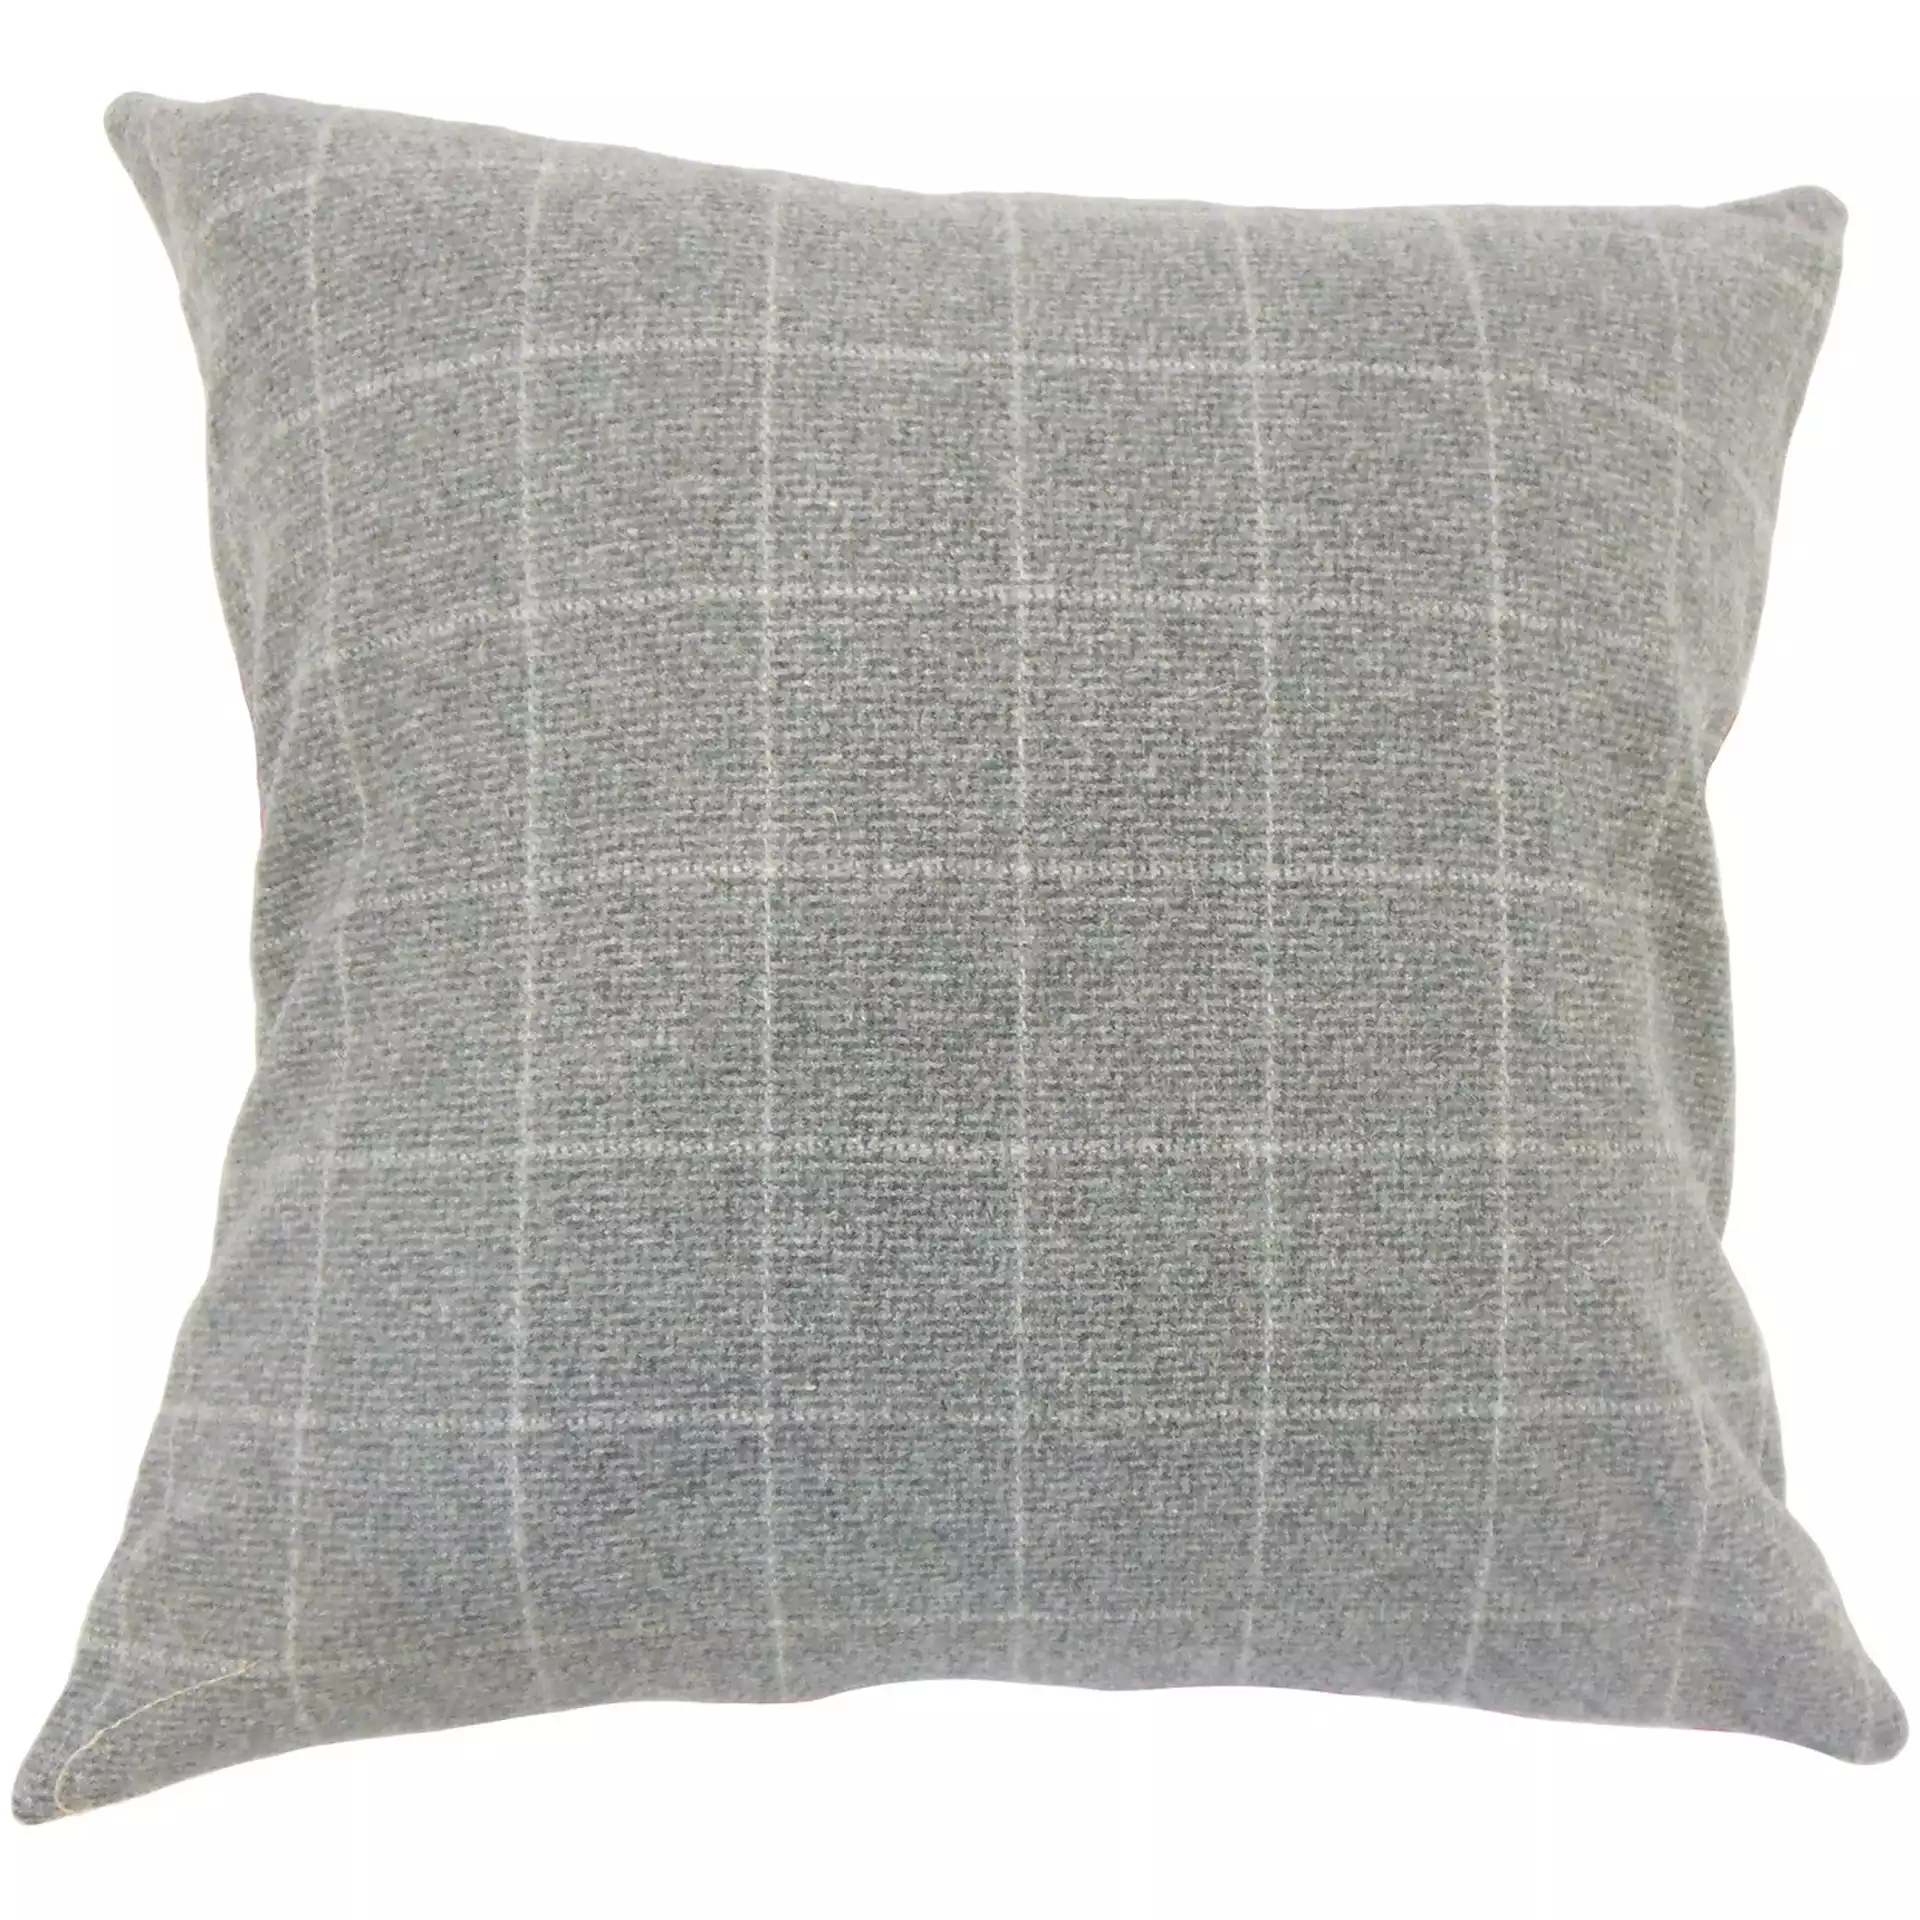 Geovany Plaid Pillow Grey - 20" x 20" - Polyester Insert